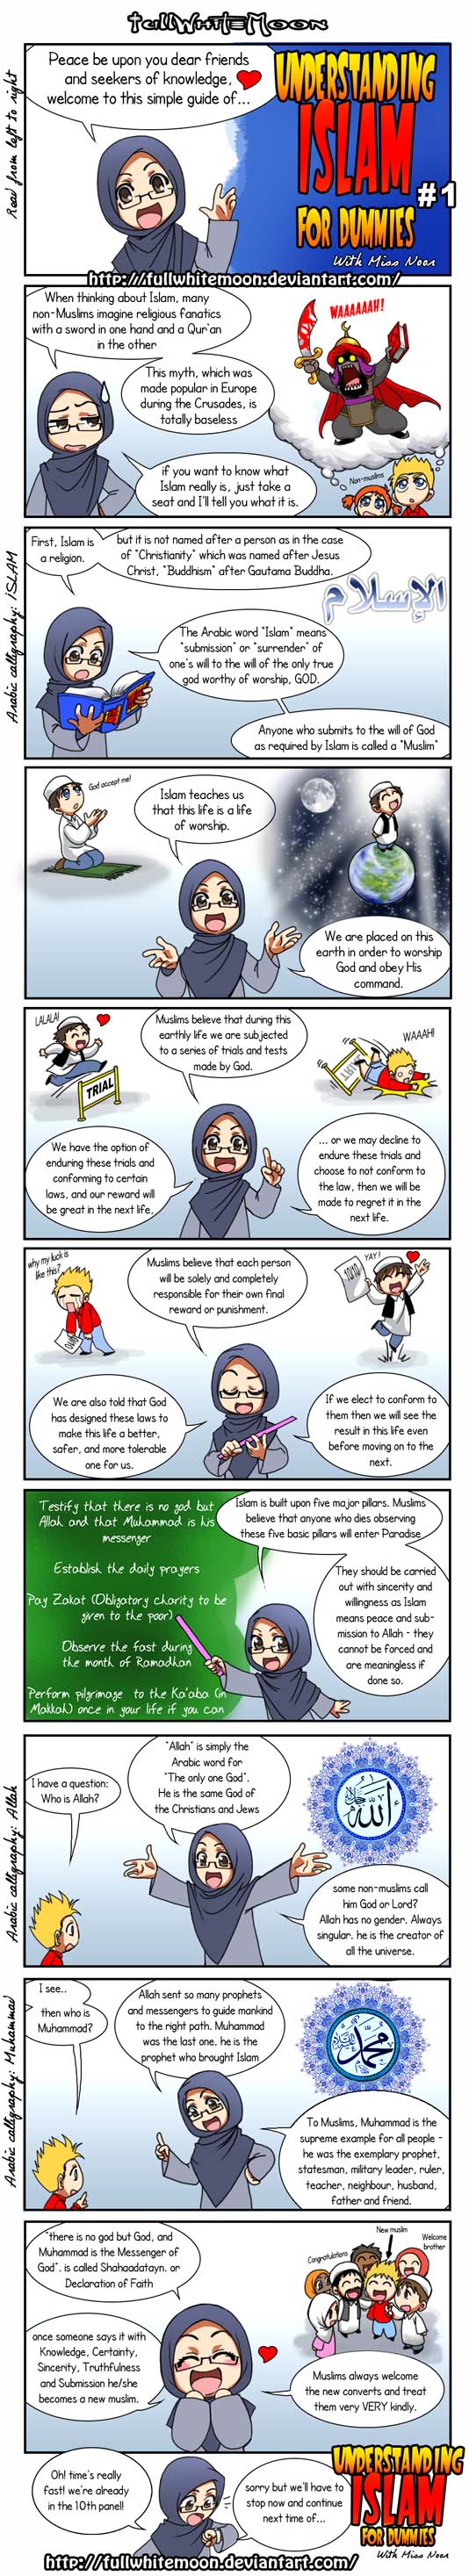 Understanding Islam 4 dummies1 by FullWhiteMoon